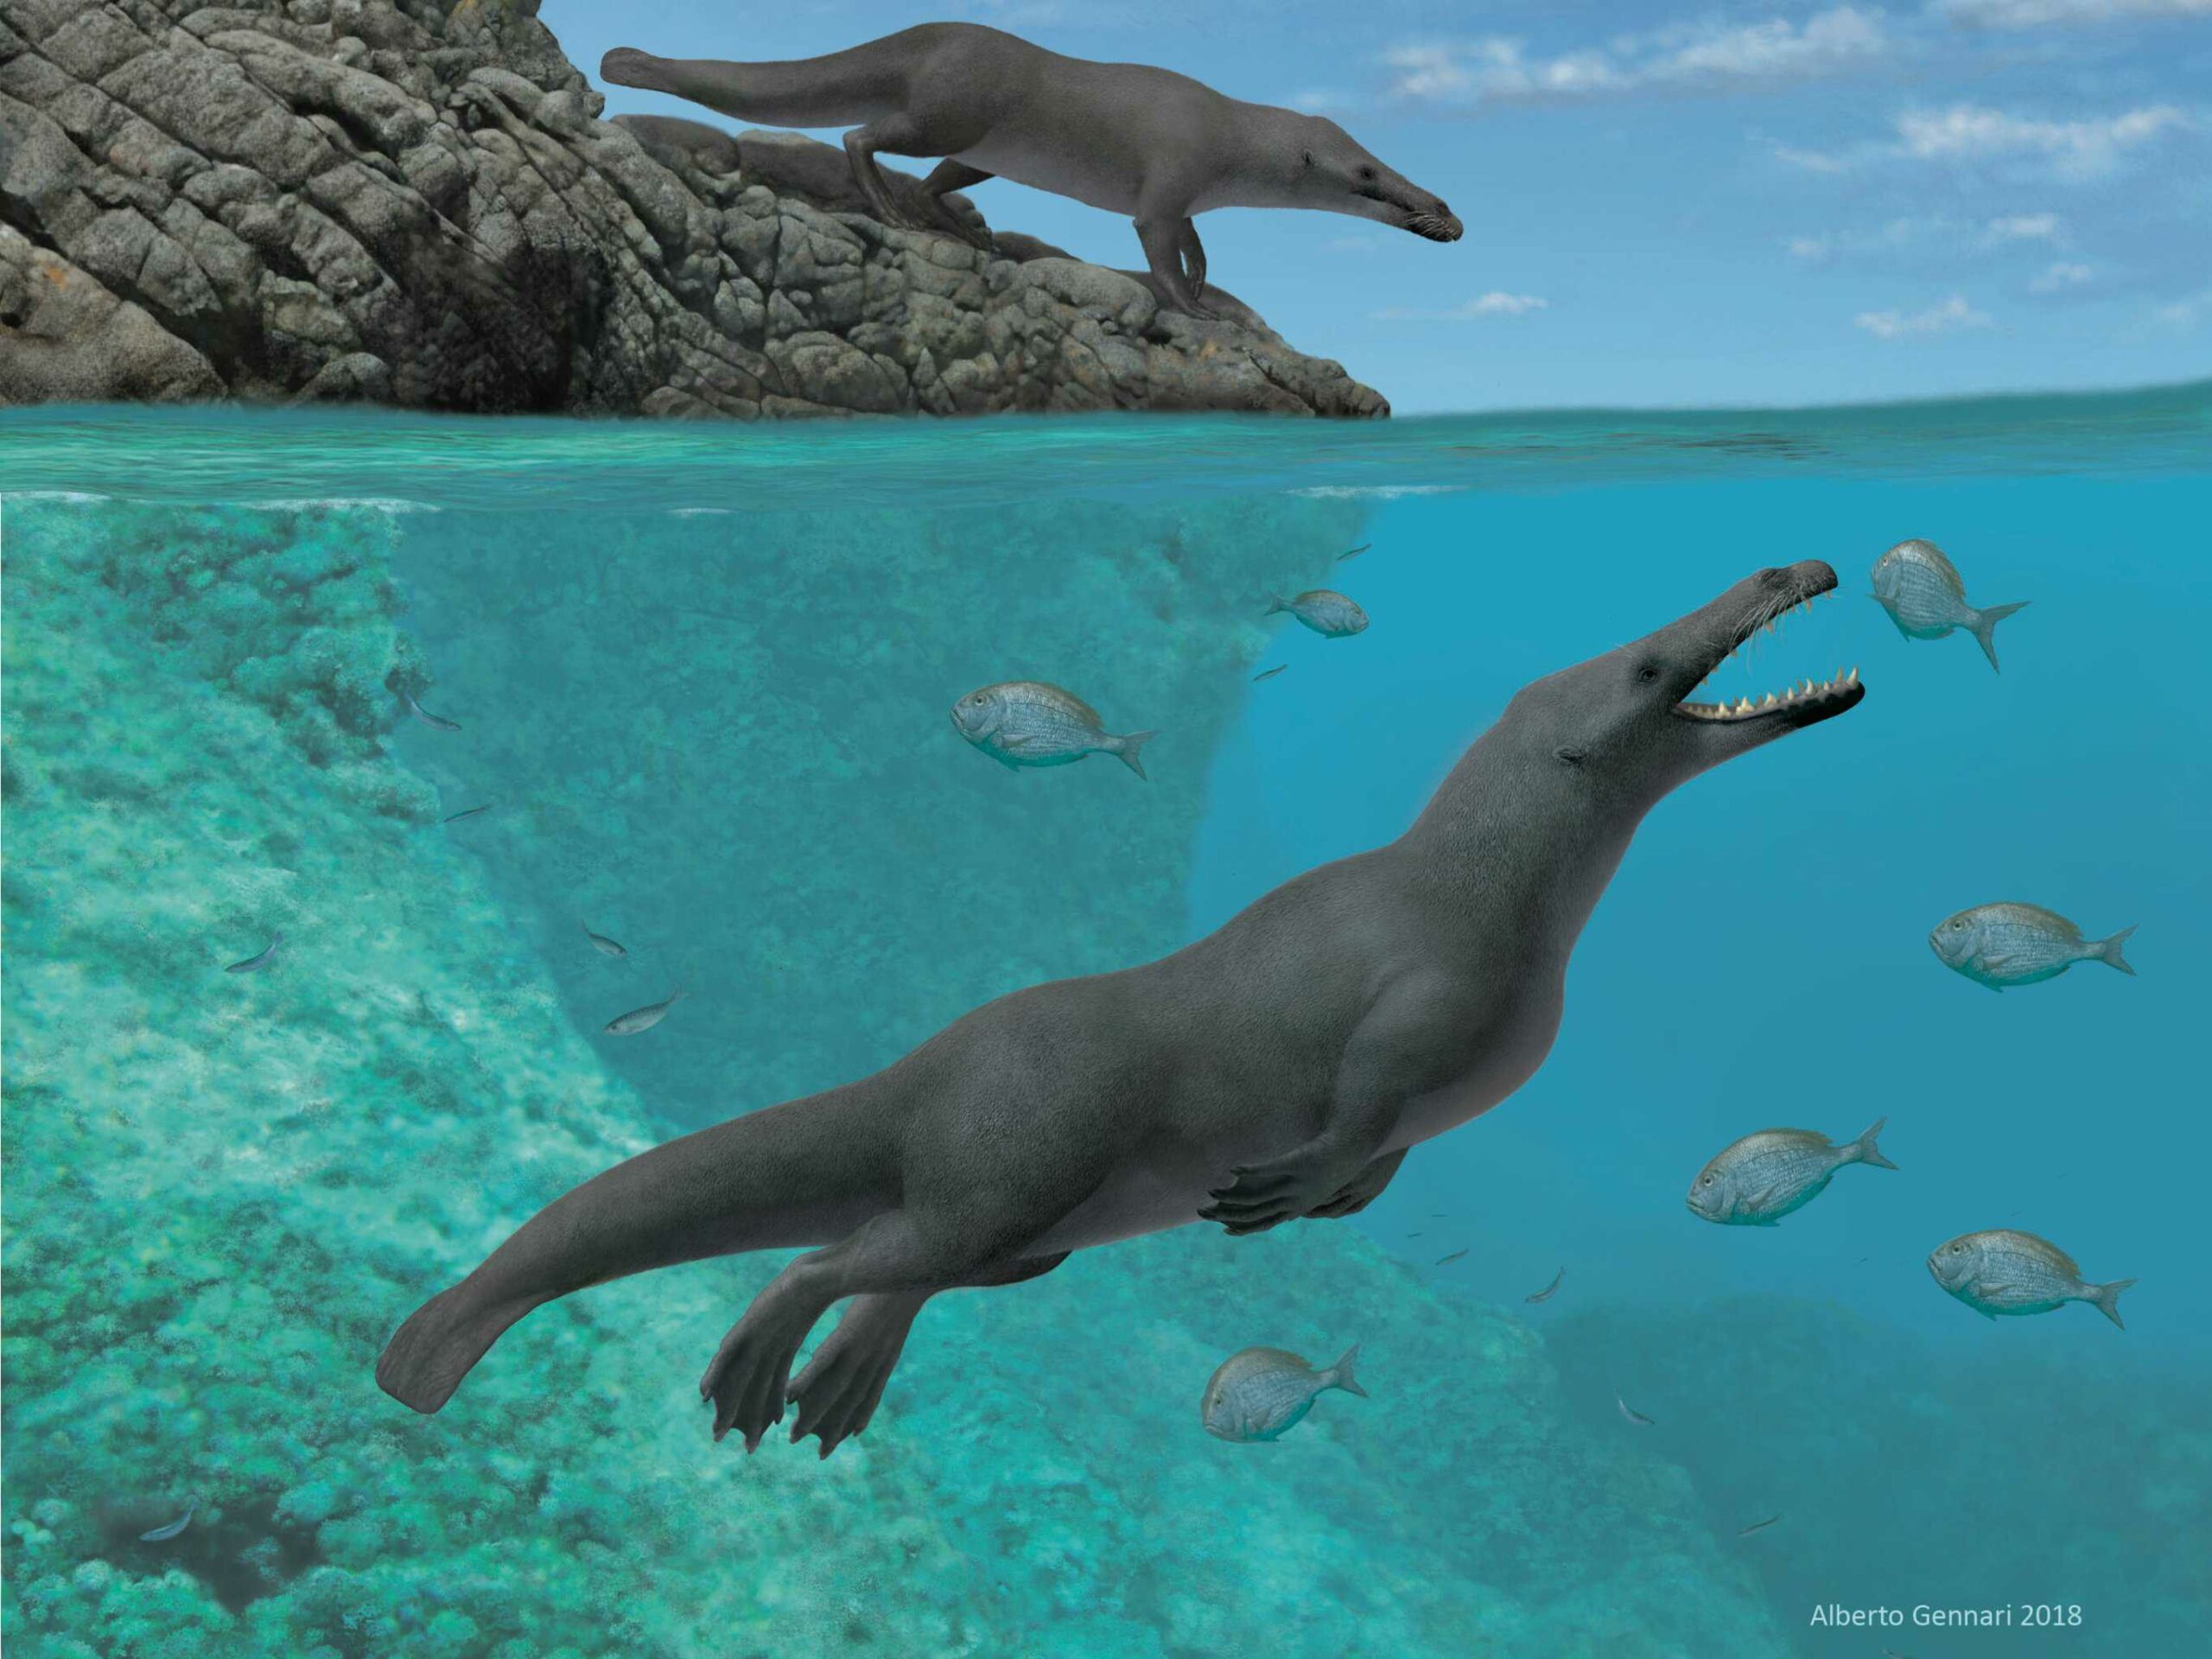 Firebenet forhistorisk hvalfossil med svømmehudsfødder fundet i Peru 1